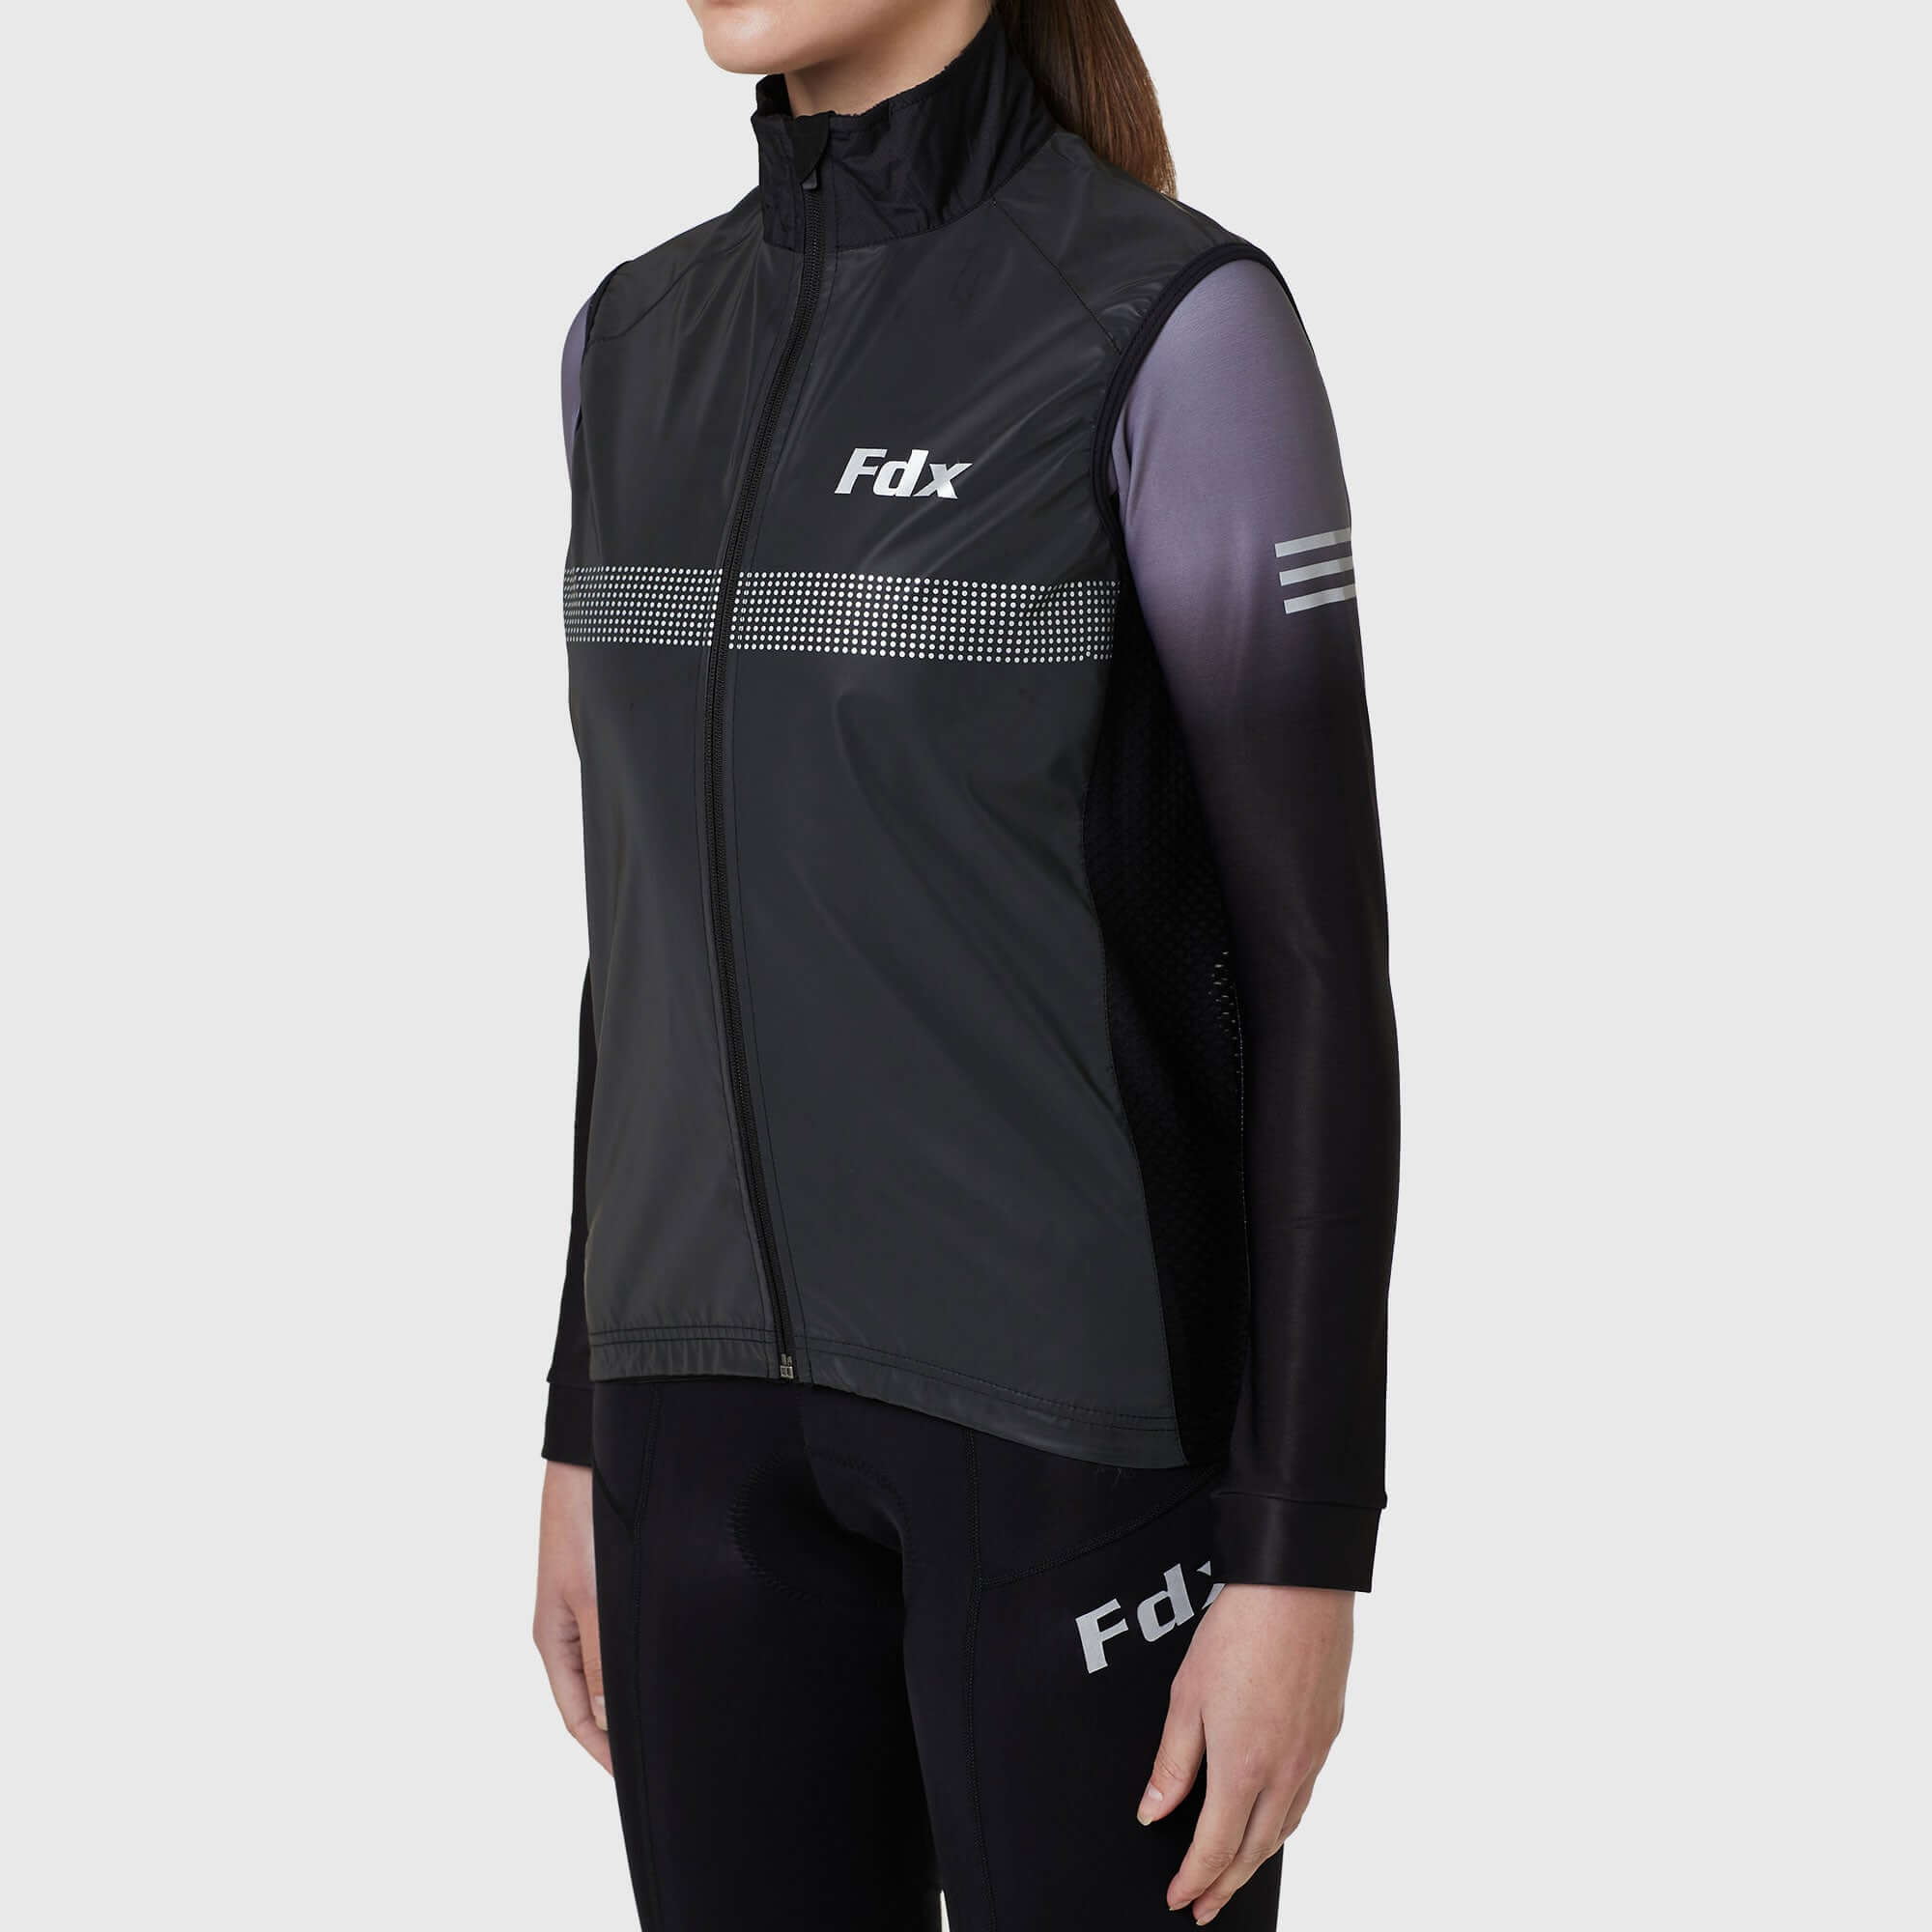 Women’s Black hi viz cycling gilet windproof breathable quick dry MTB rain vest, lightweight packable 360 reflective rain top for riding